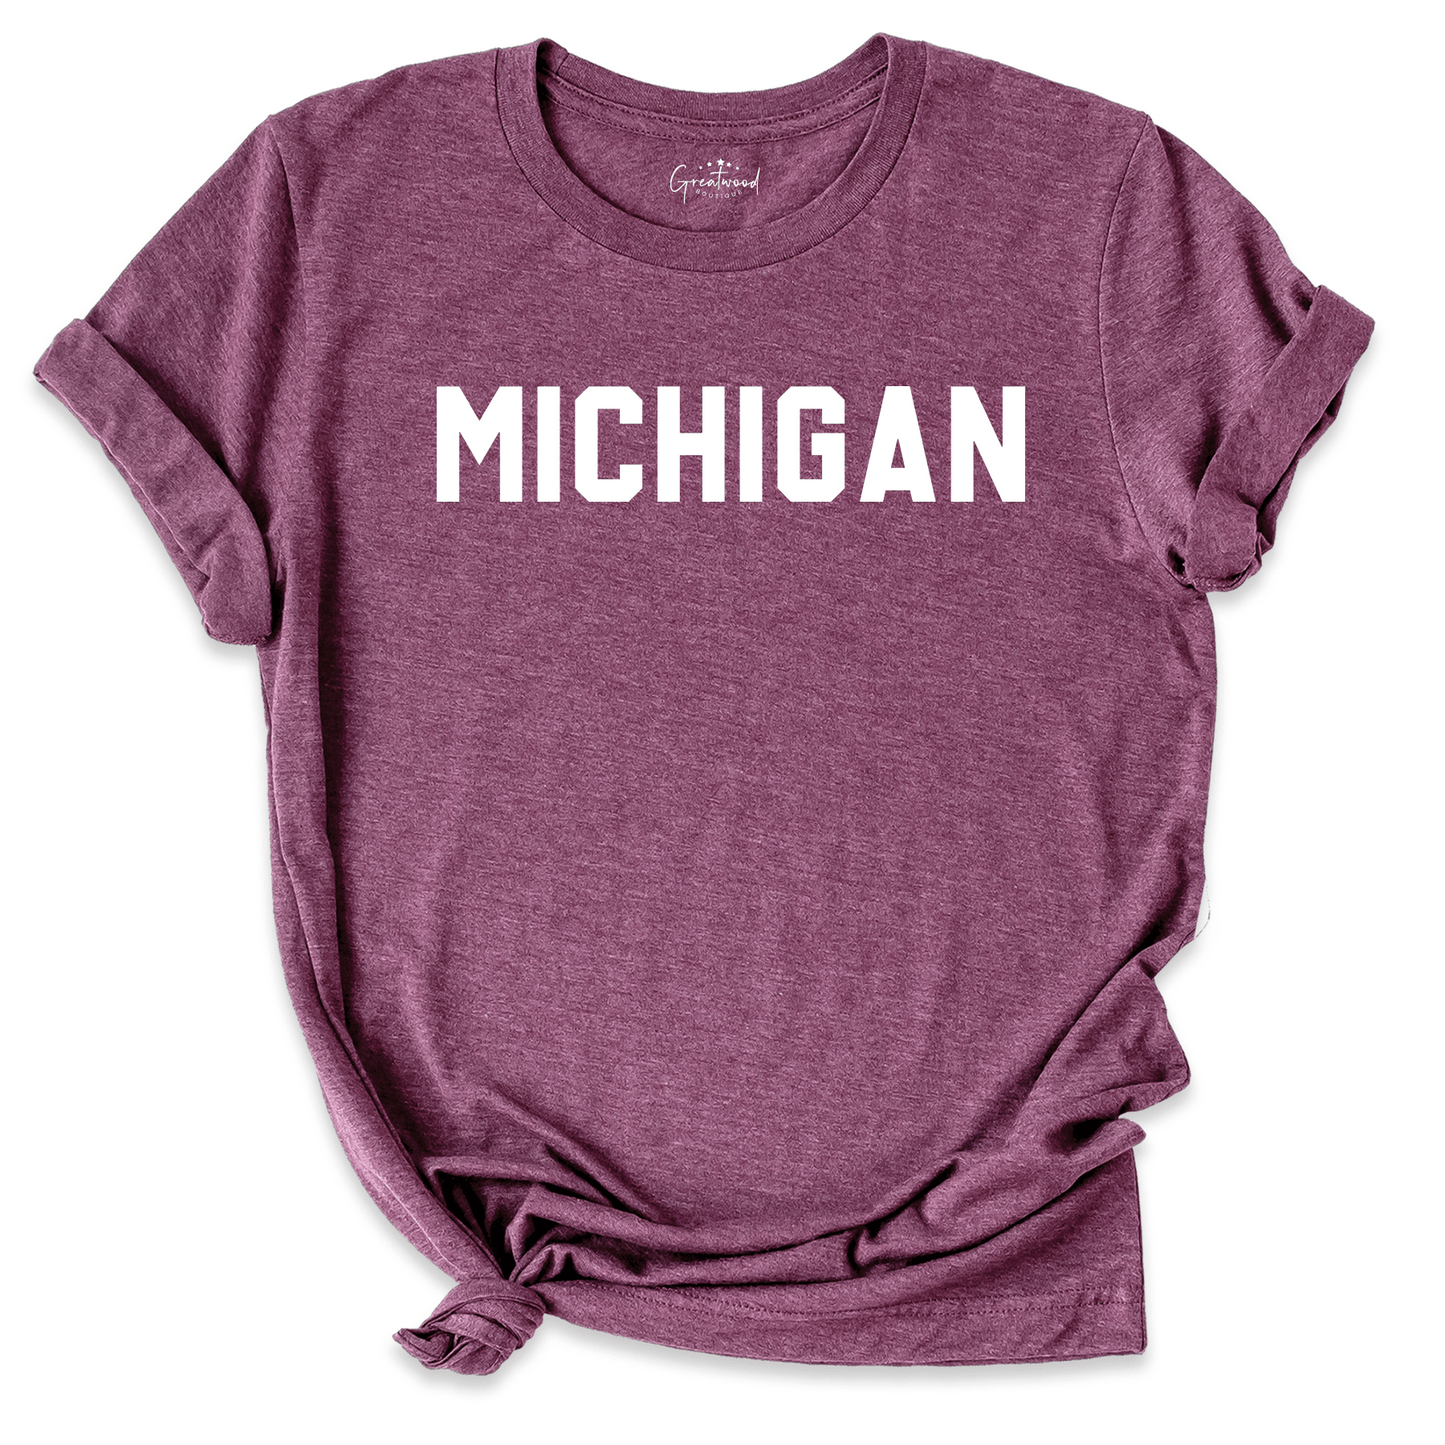 Michigan Shirt